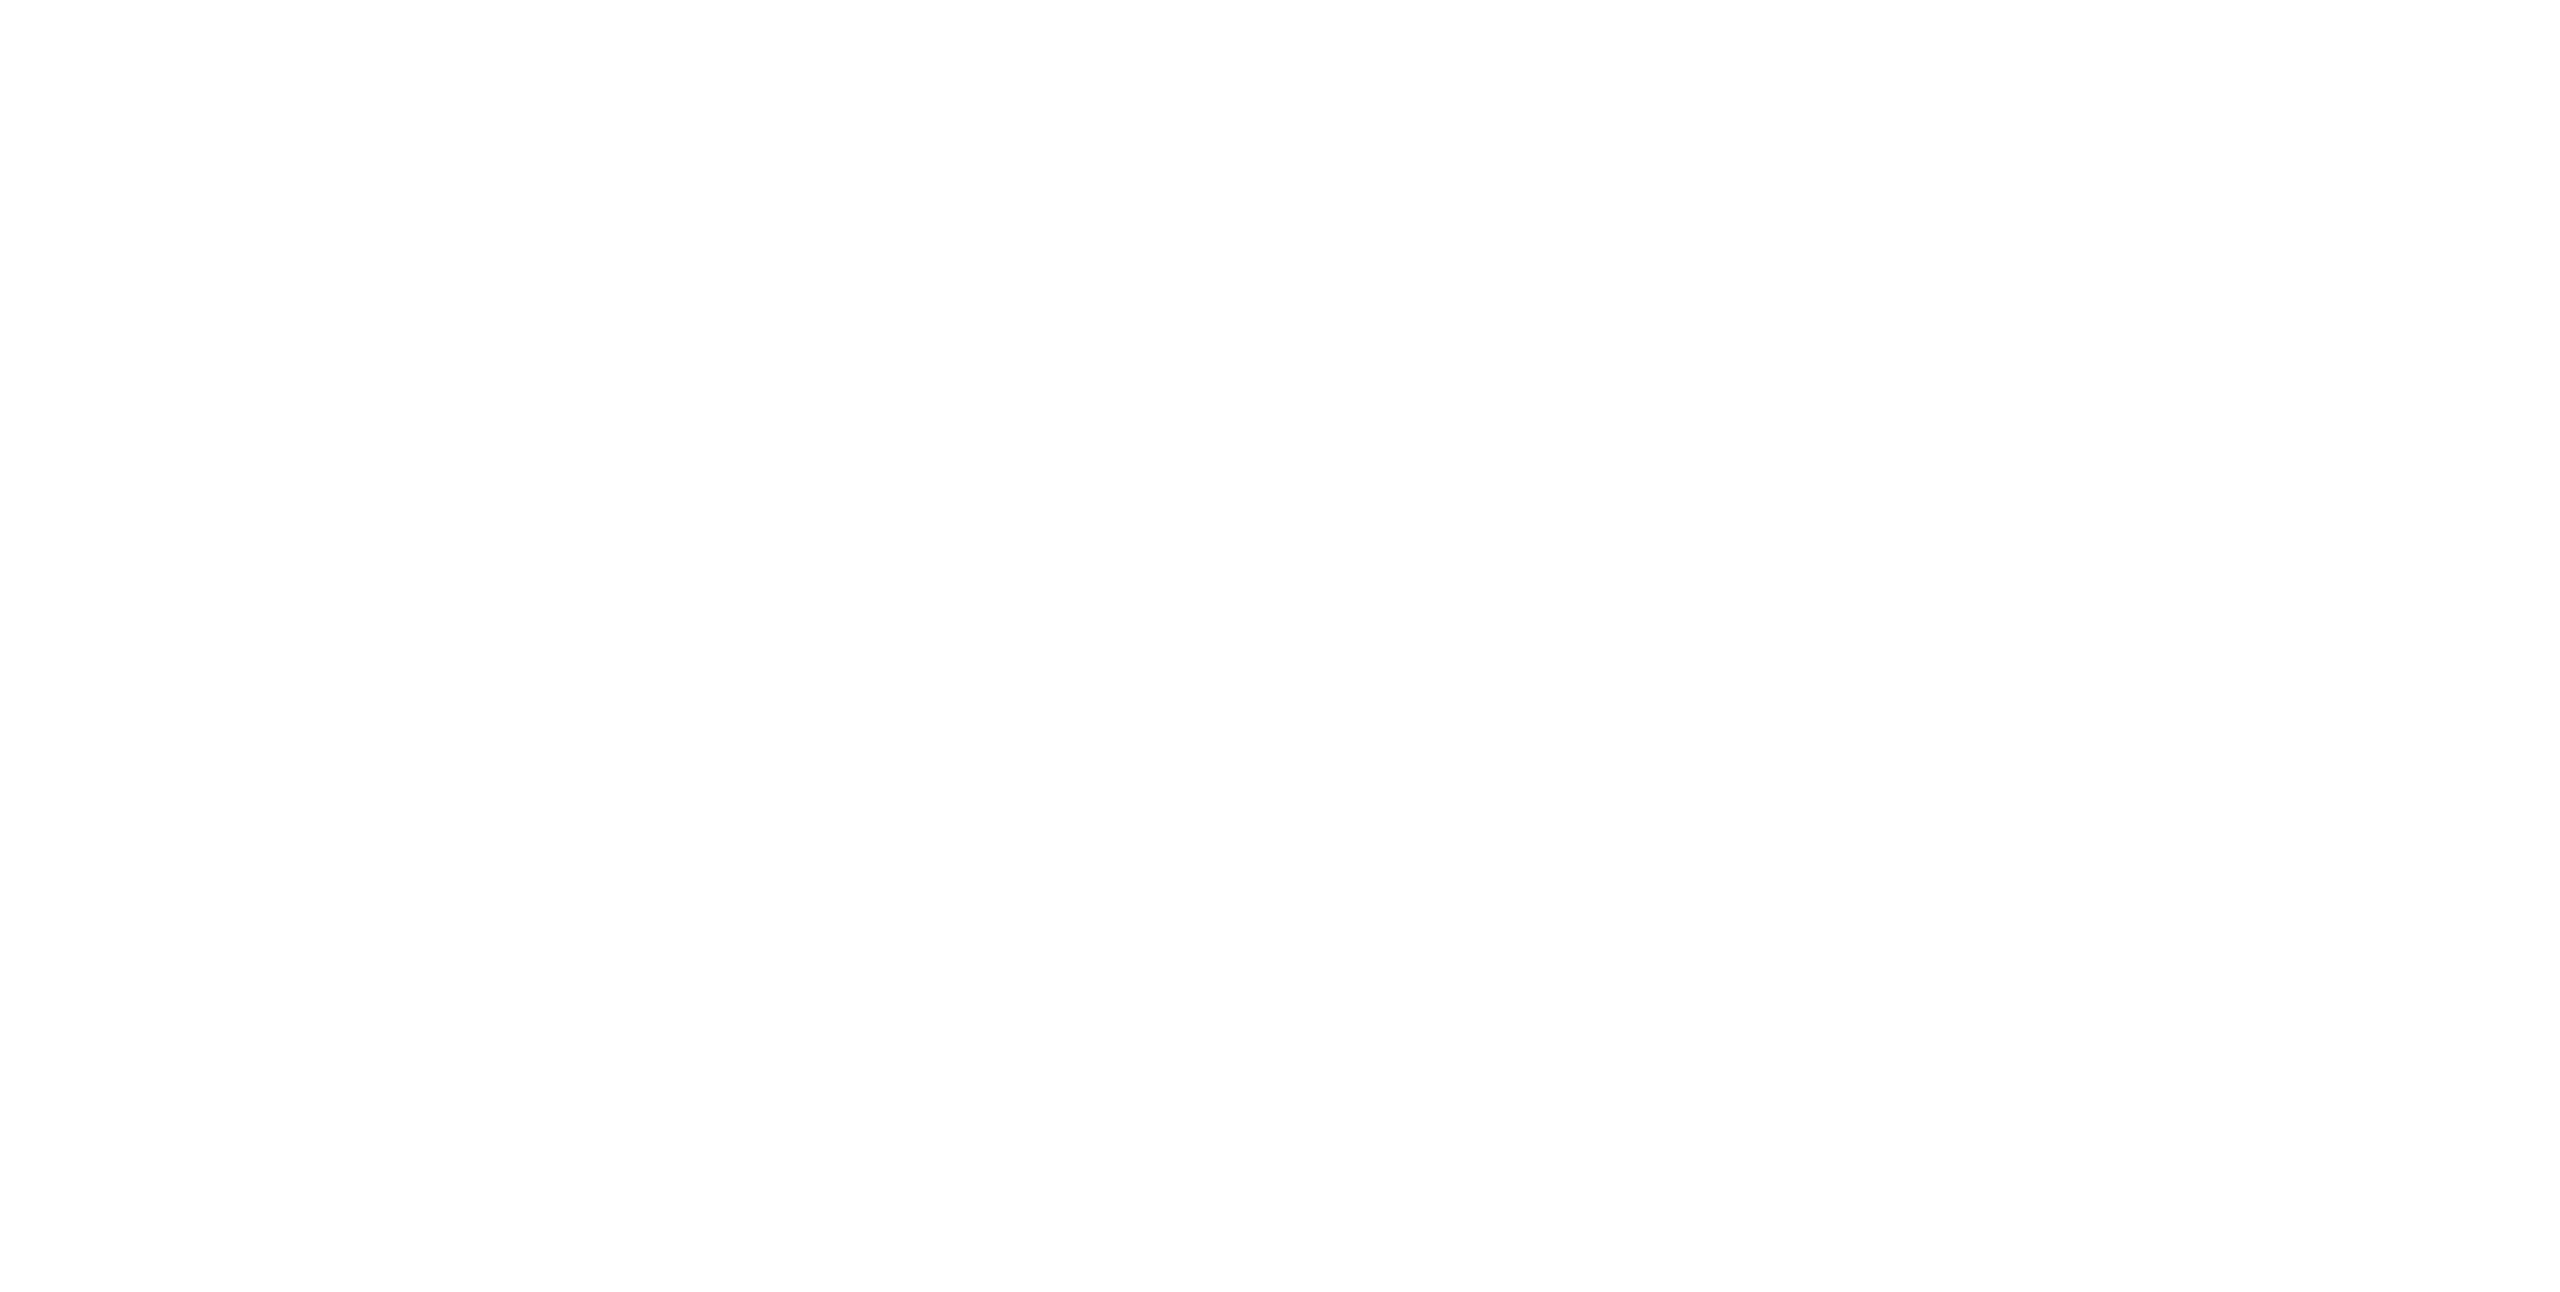 Tierkommunikation - Linda Erbe